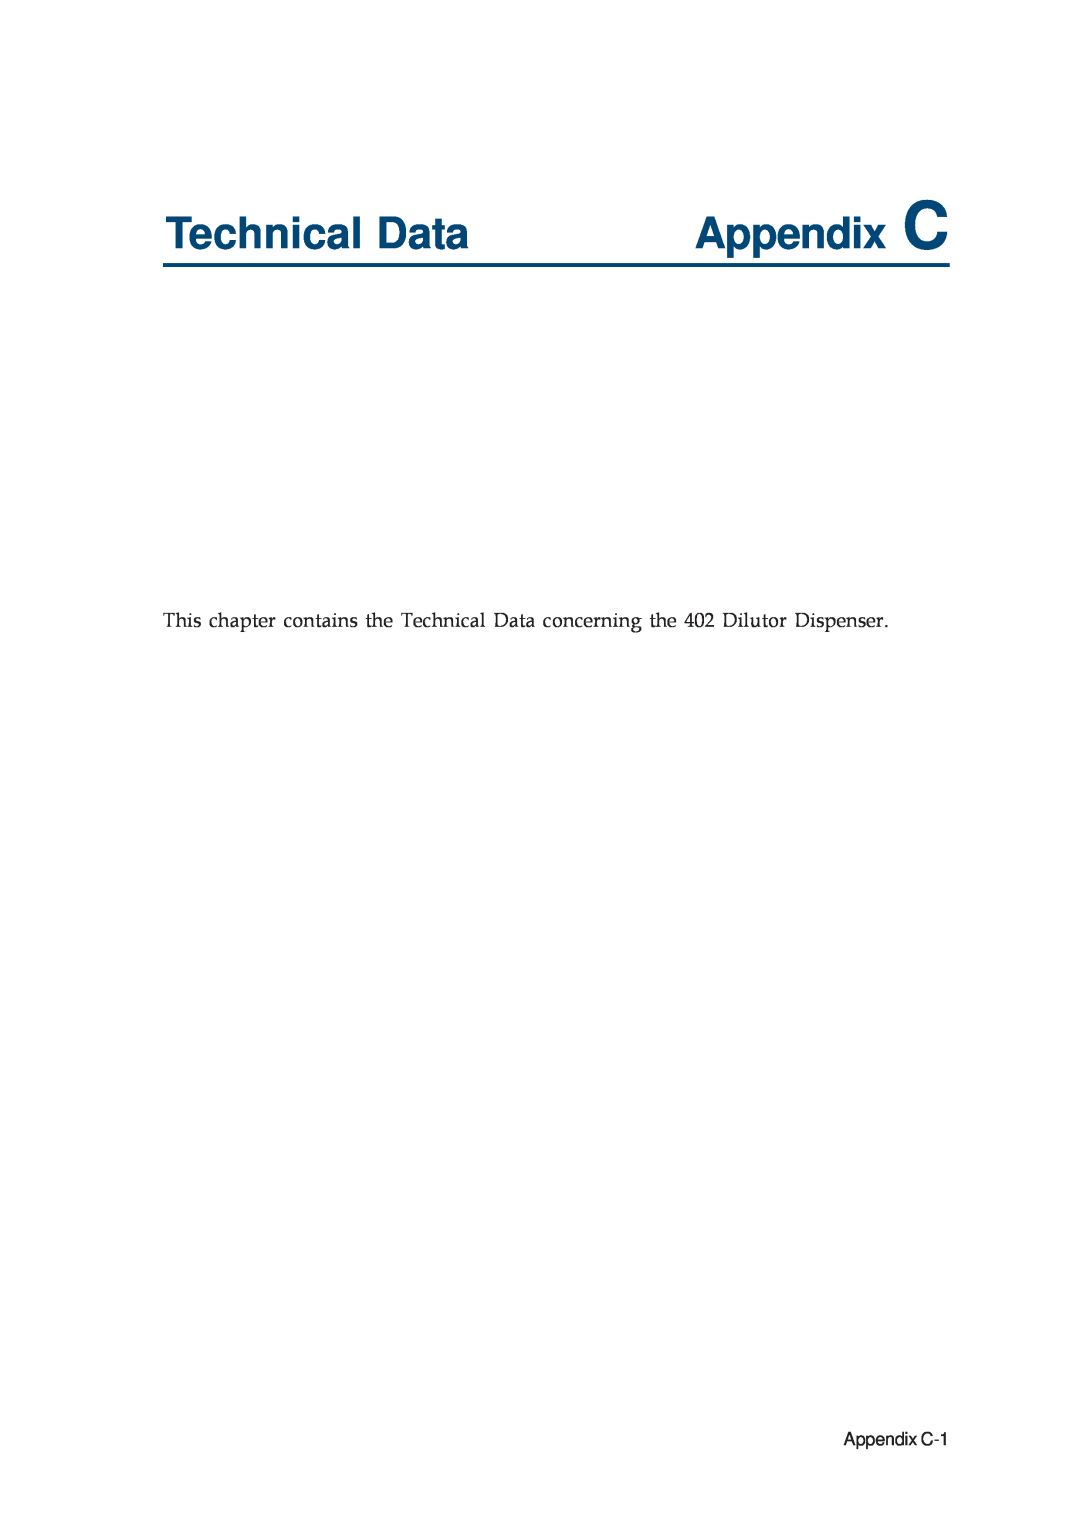 Gilson 402 manual Technical Data, Appendix C 